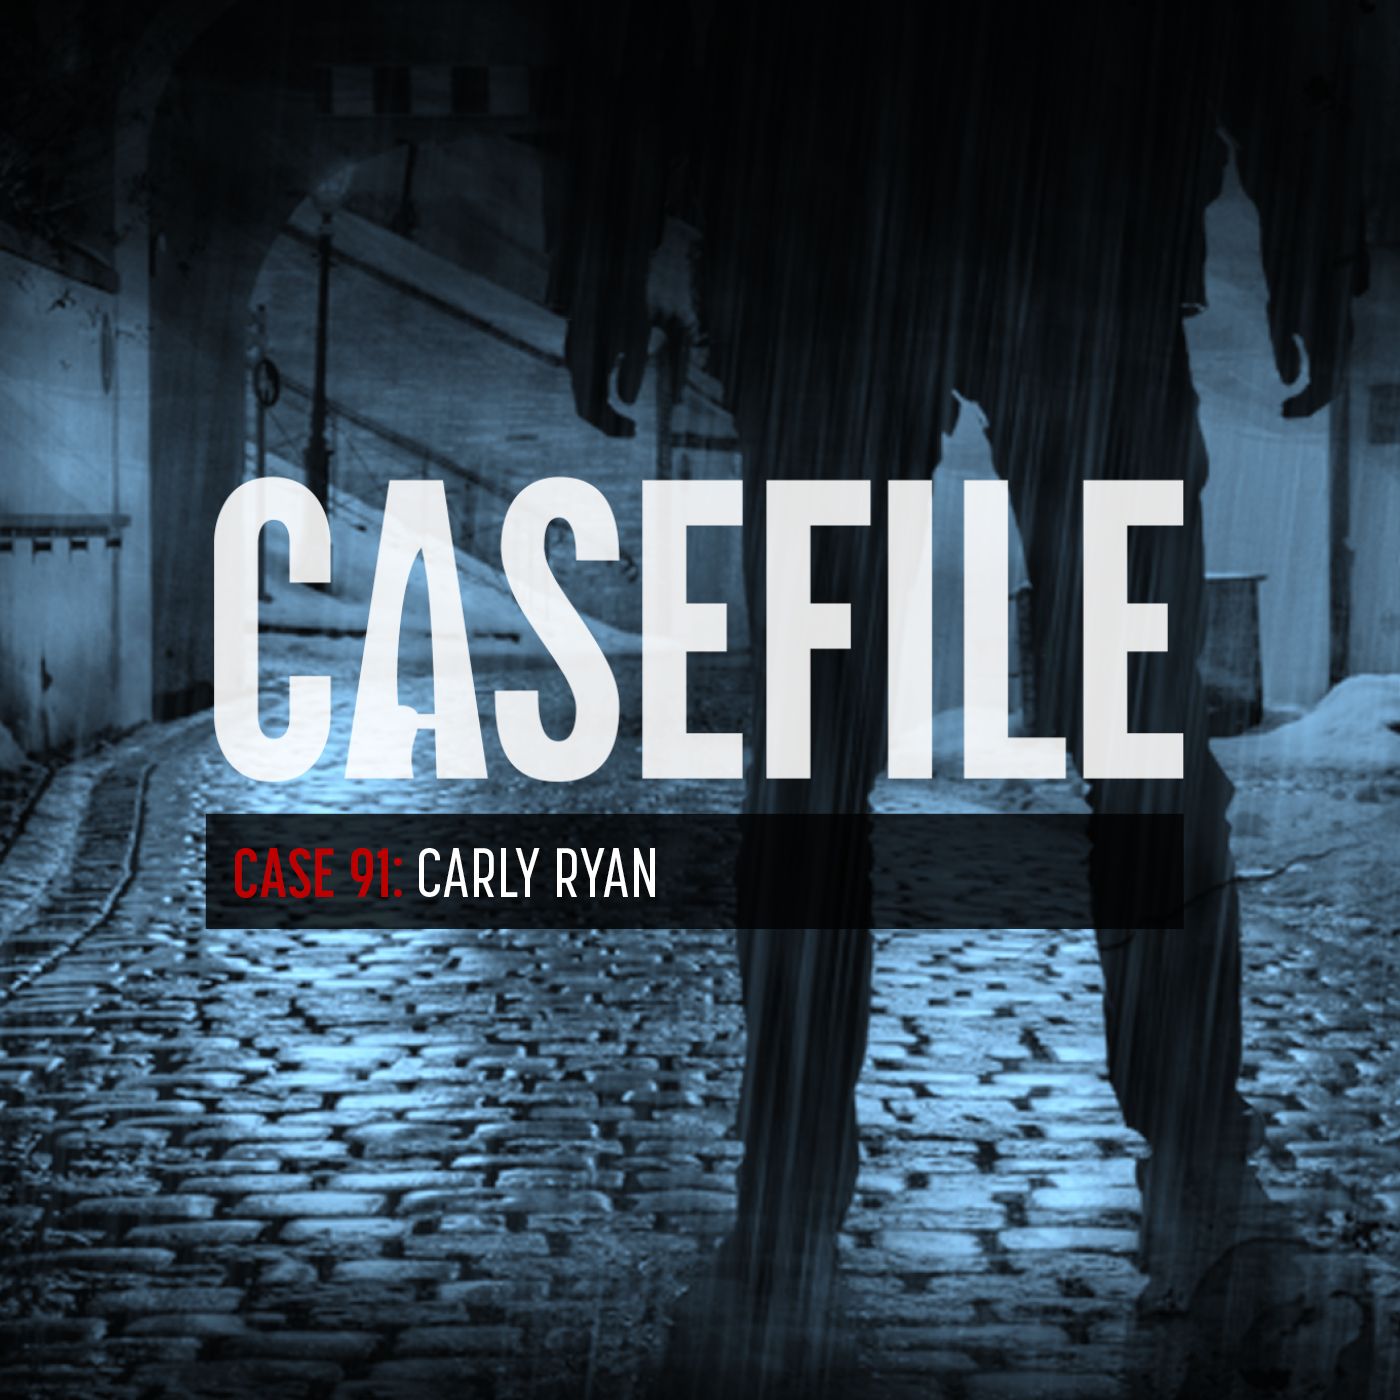 Case 91: Carly Ryan